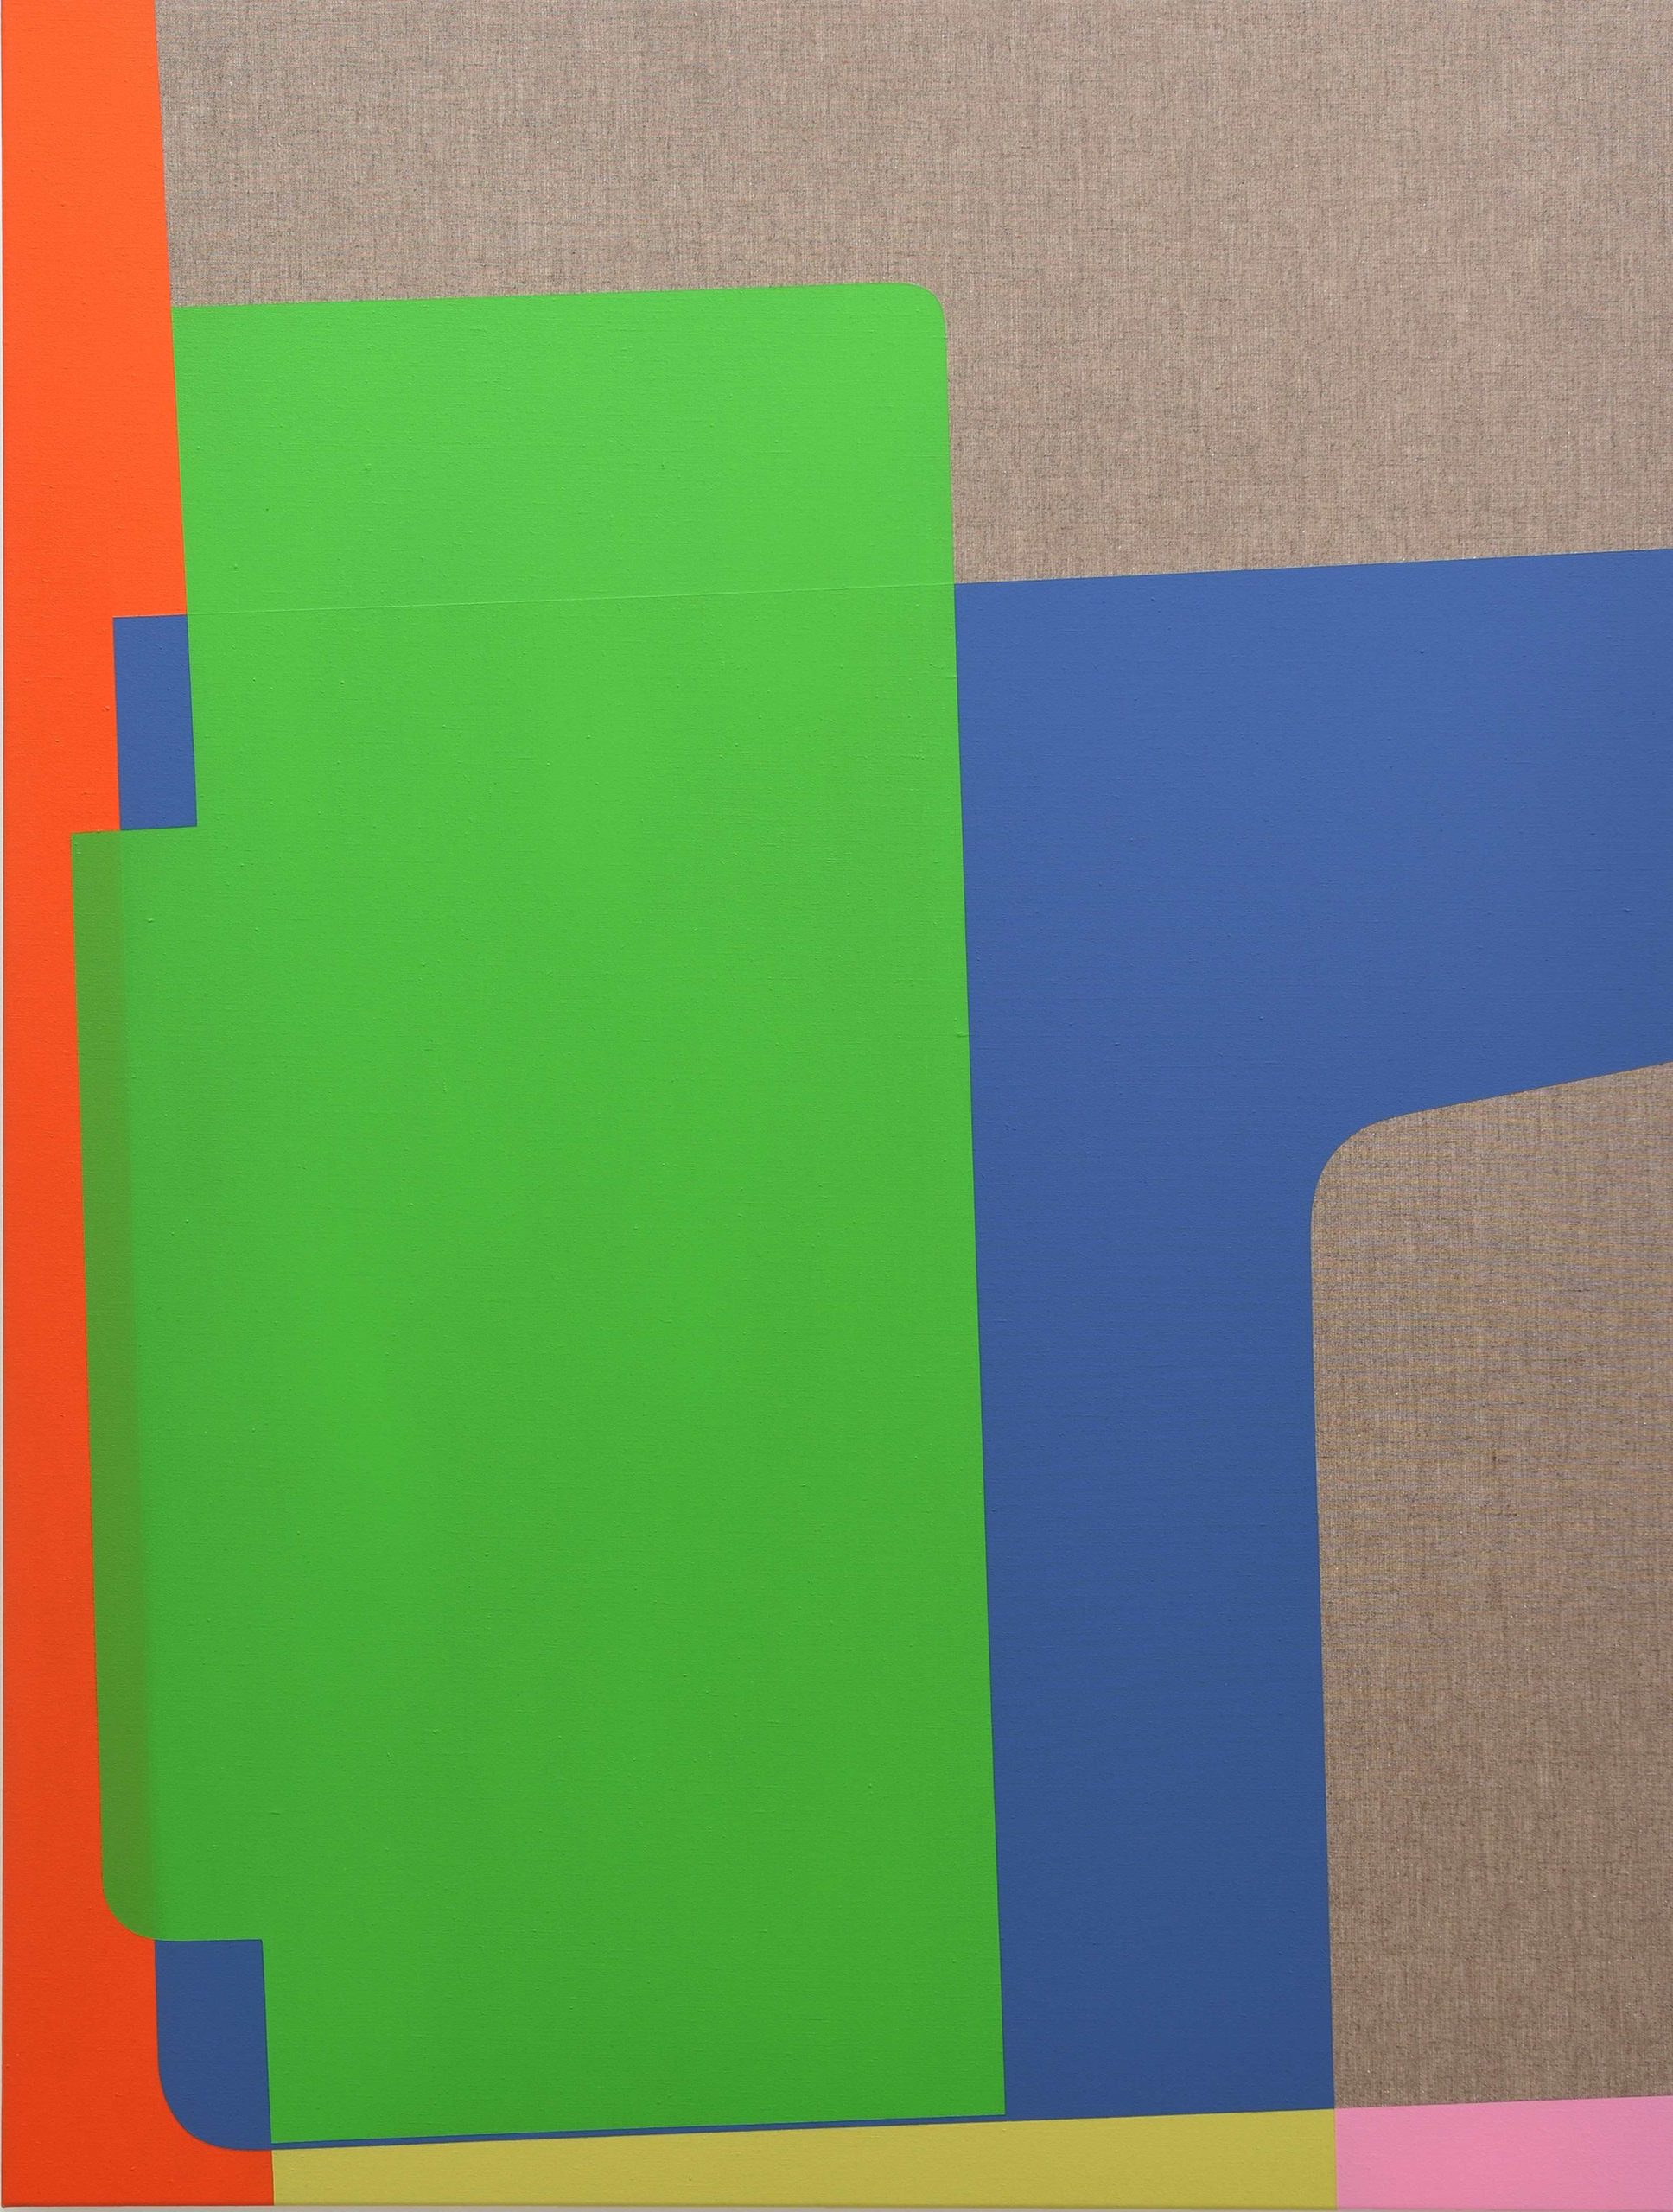 Matthew Browne 'Athru' vinyl tempera and oil on linen 107 x 81cm $10,500